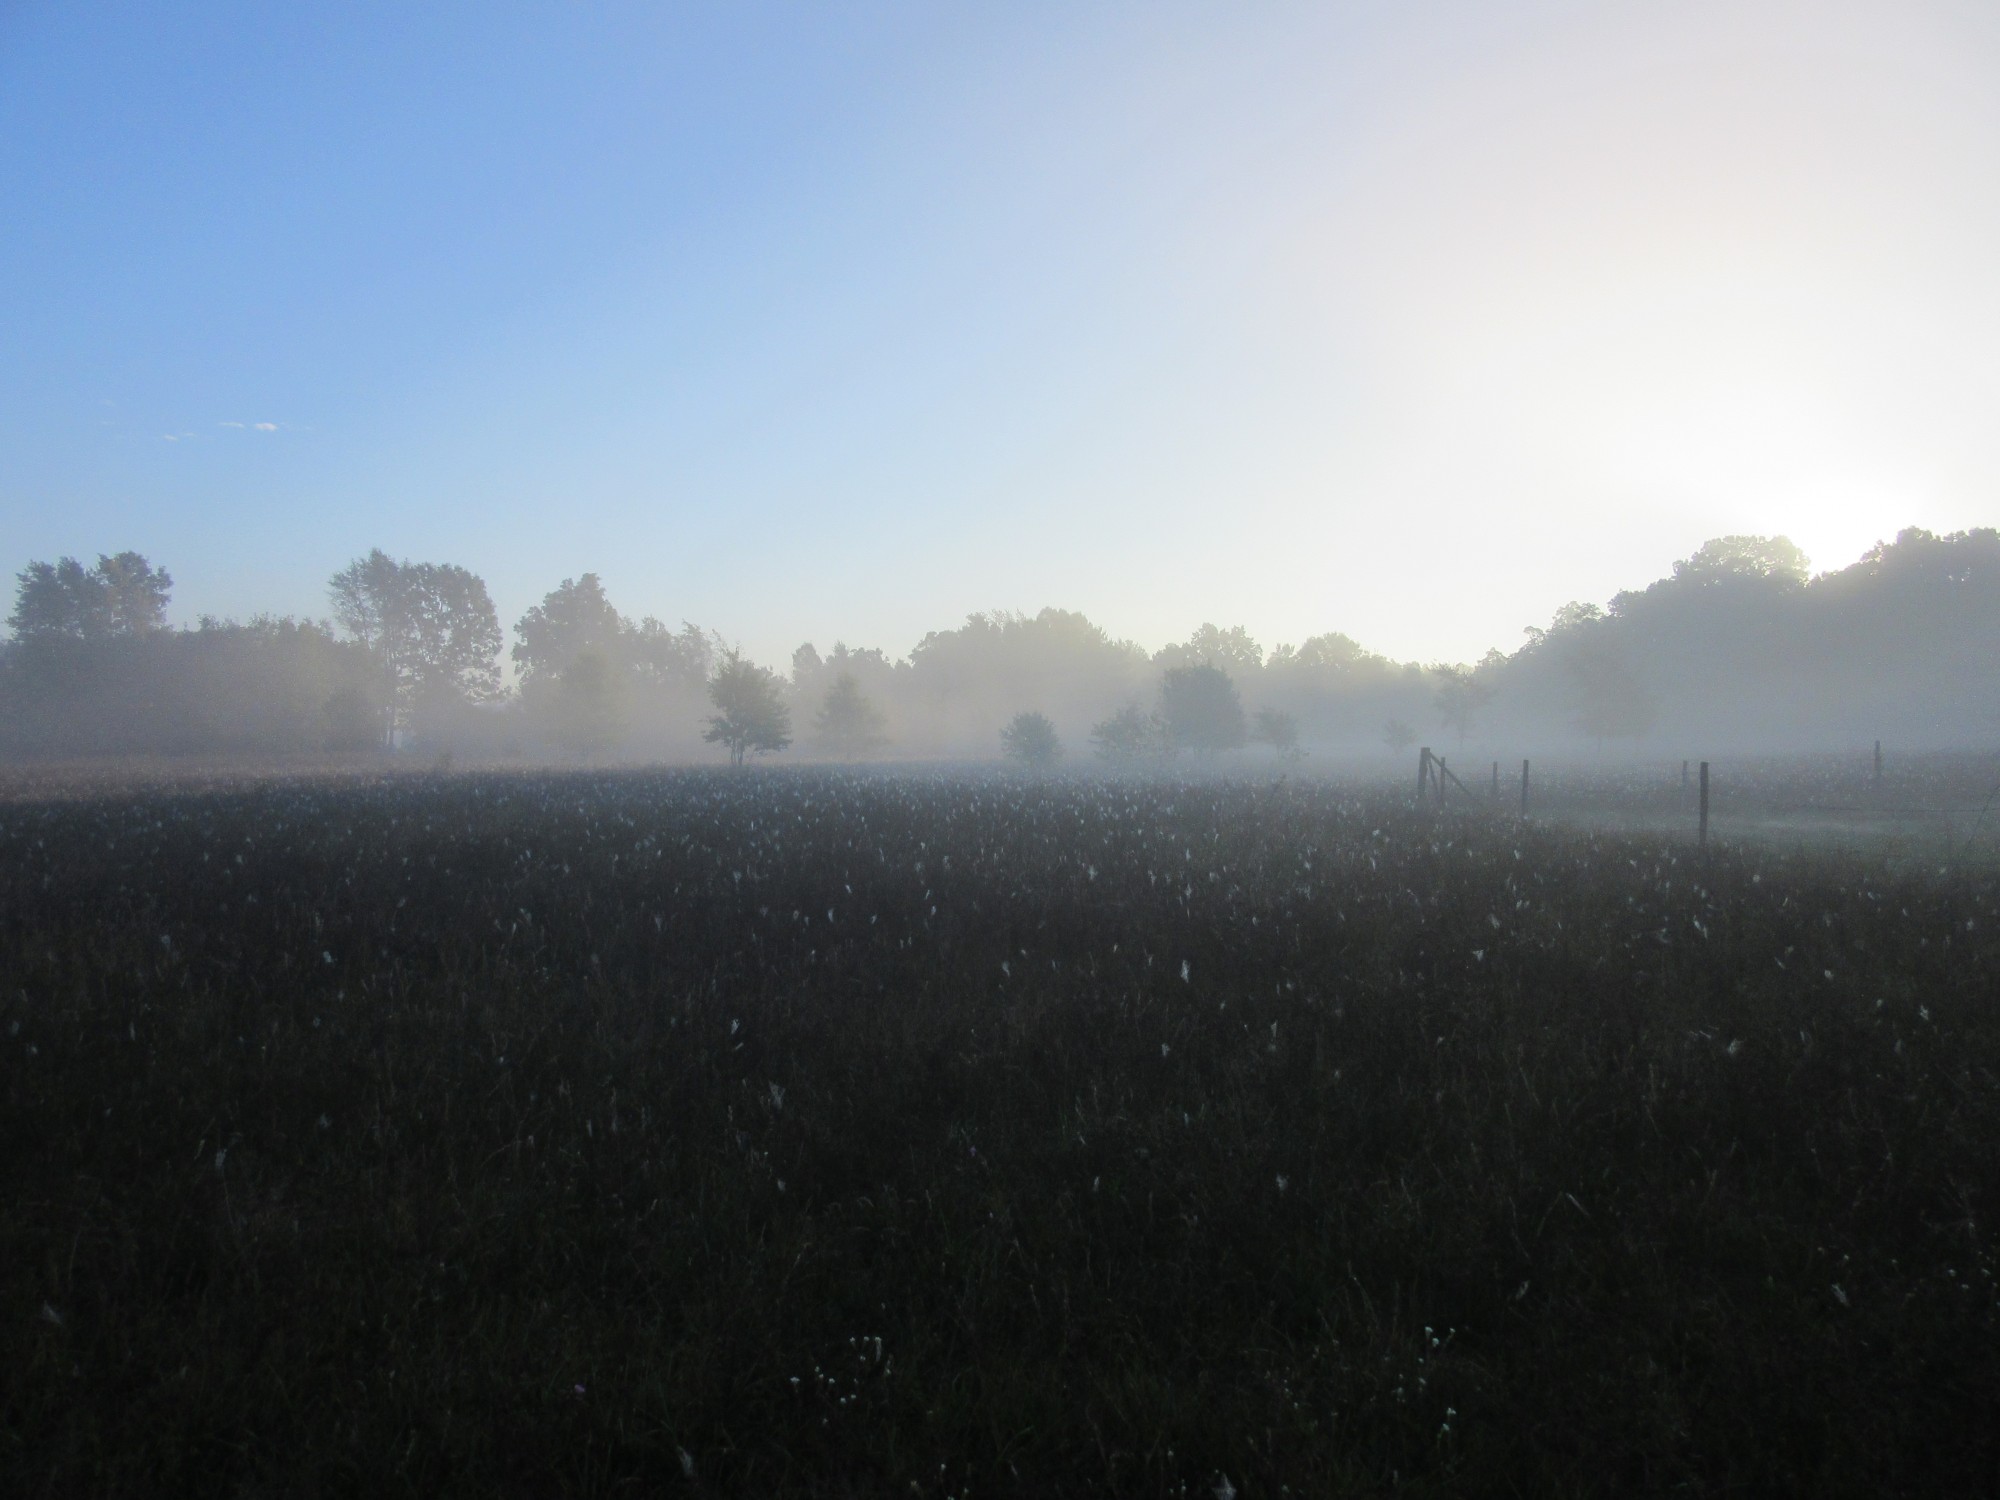 Misty fall morning highlights webs & weeds.